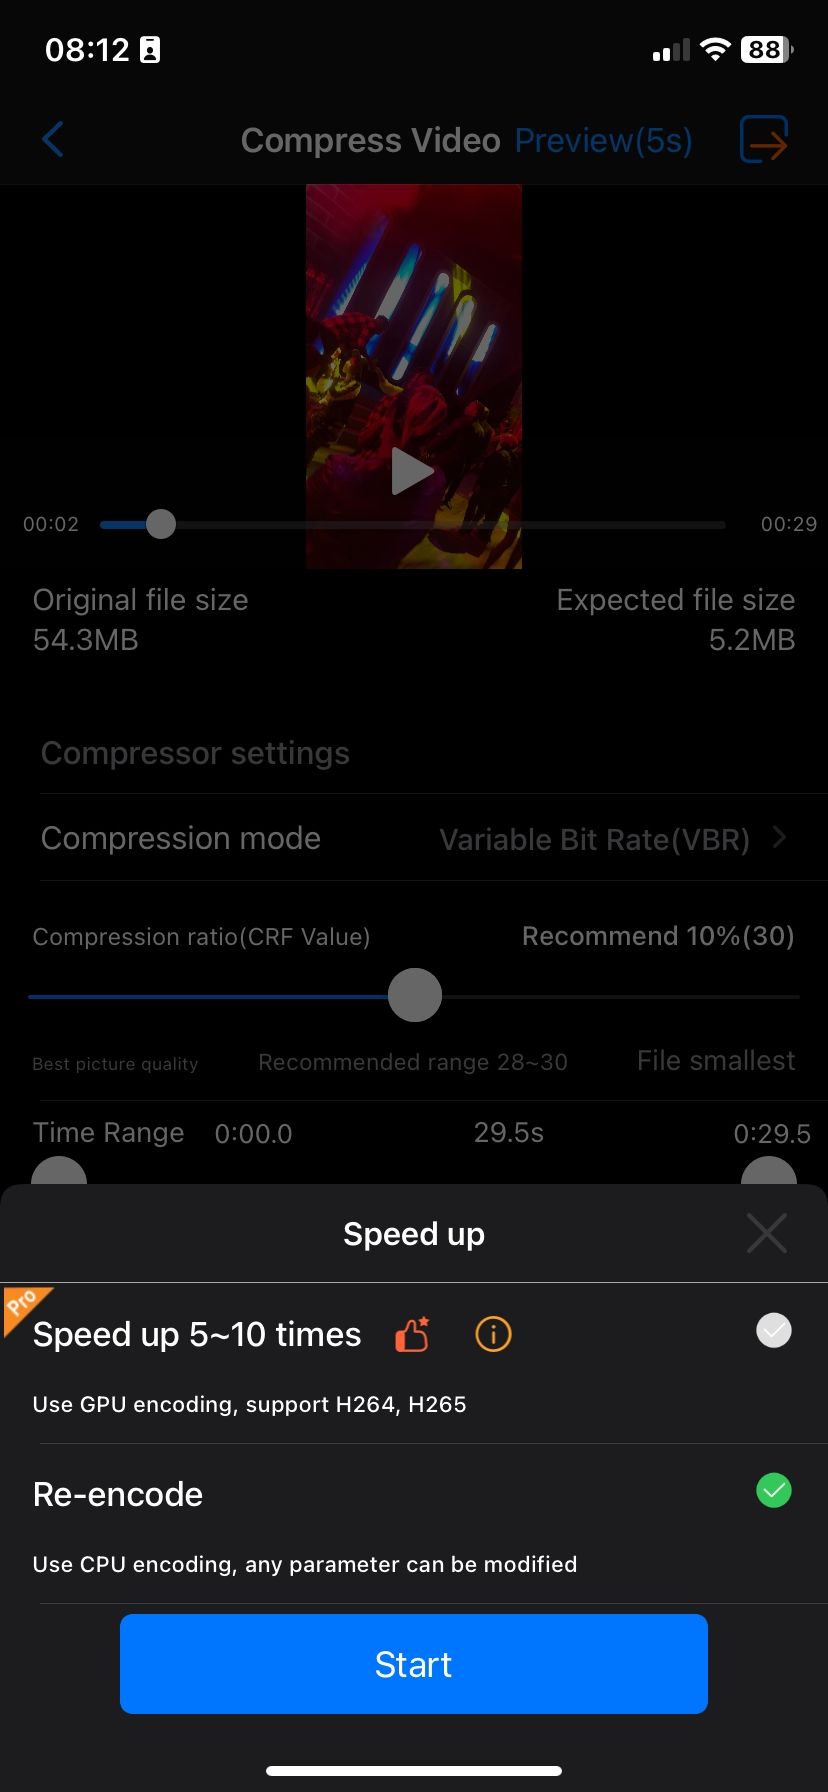 Compressing a video in Media Converter app